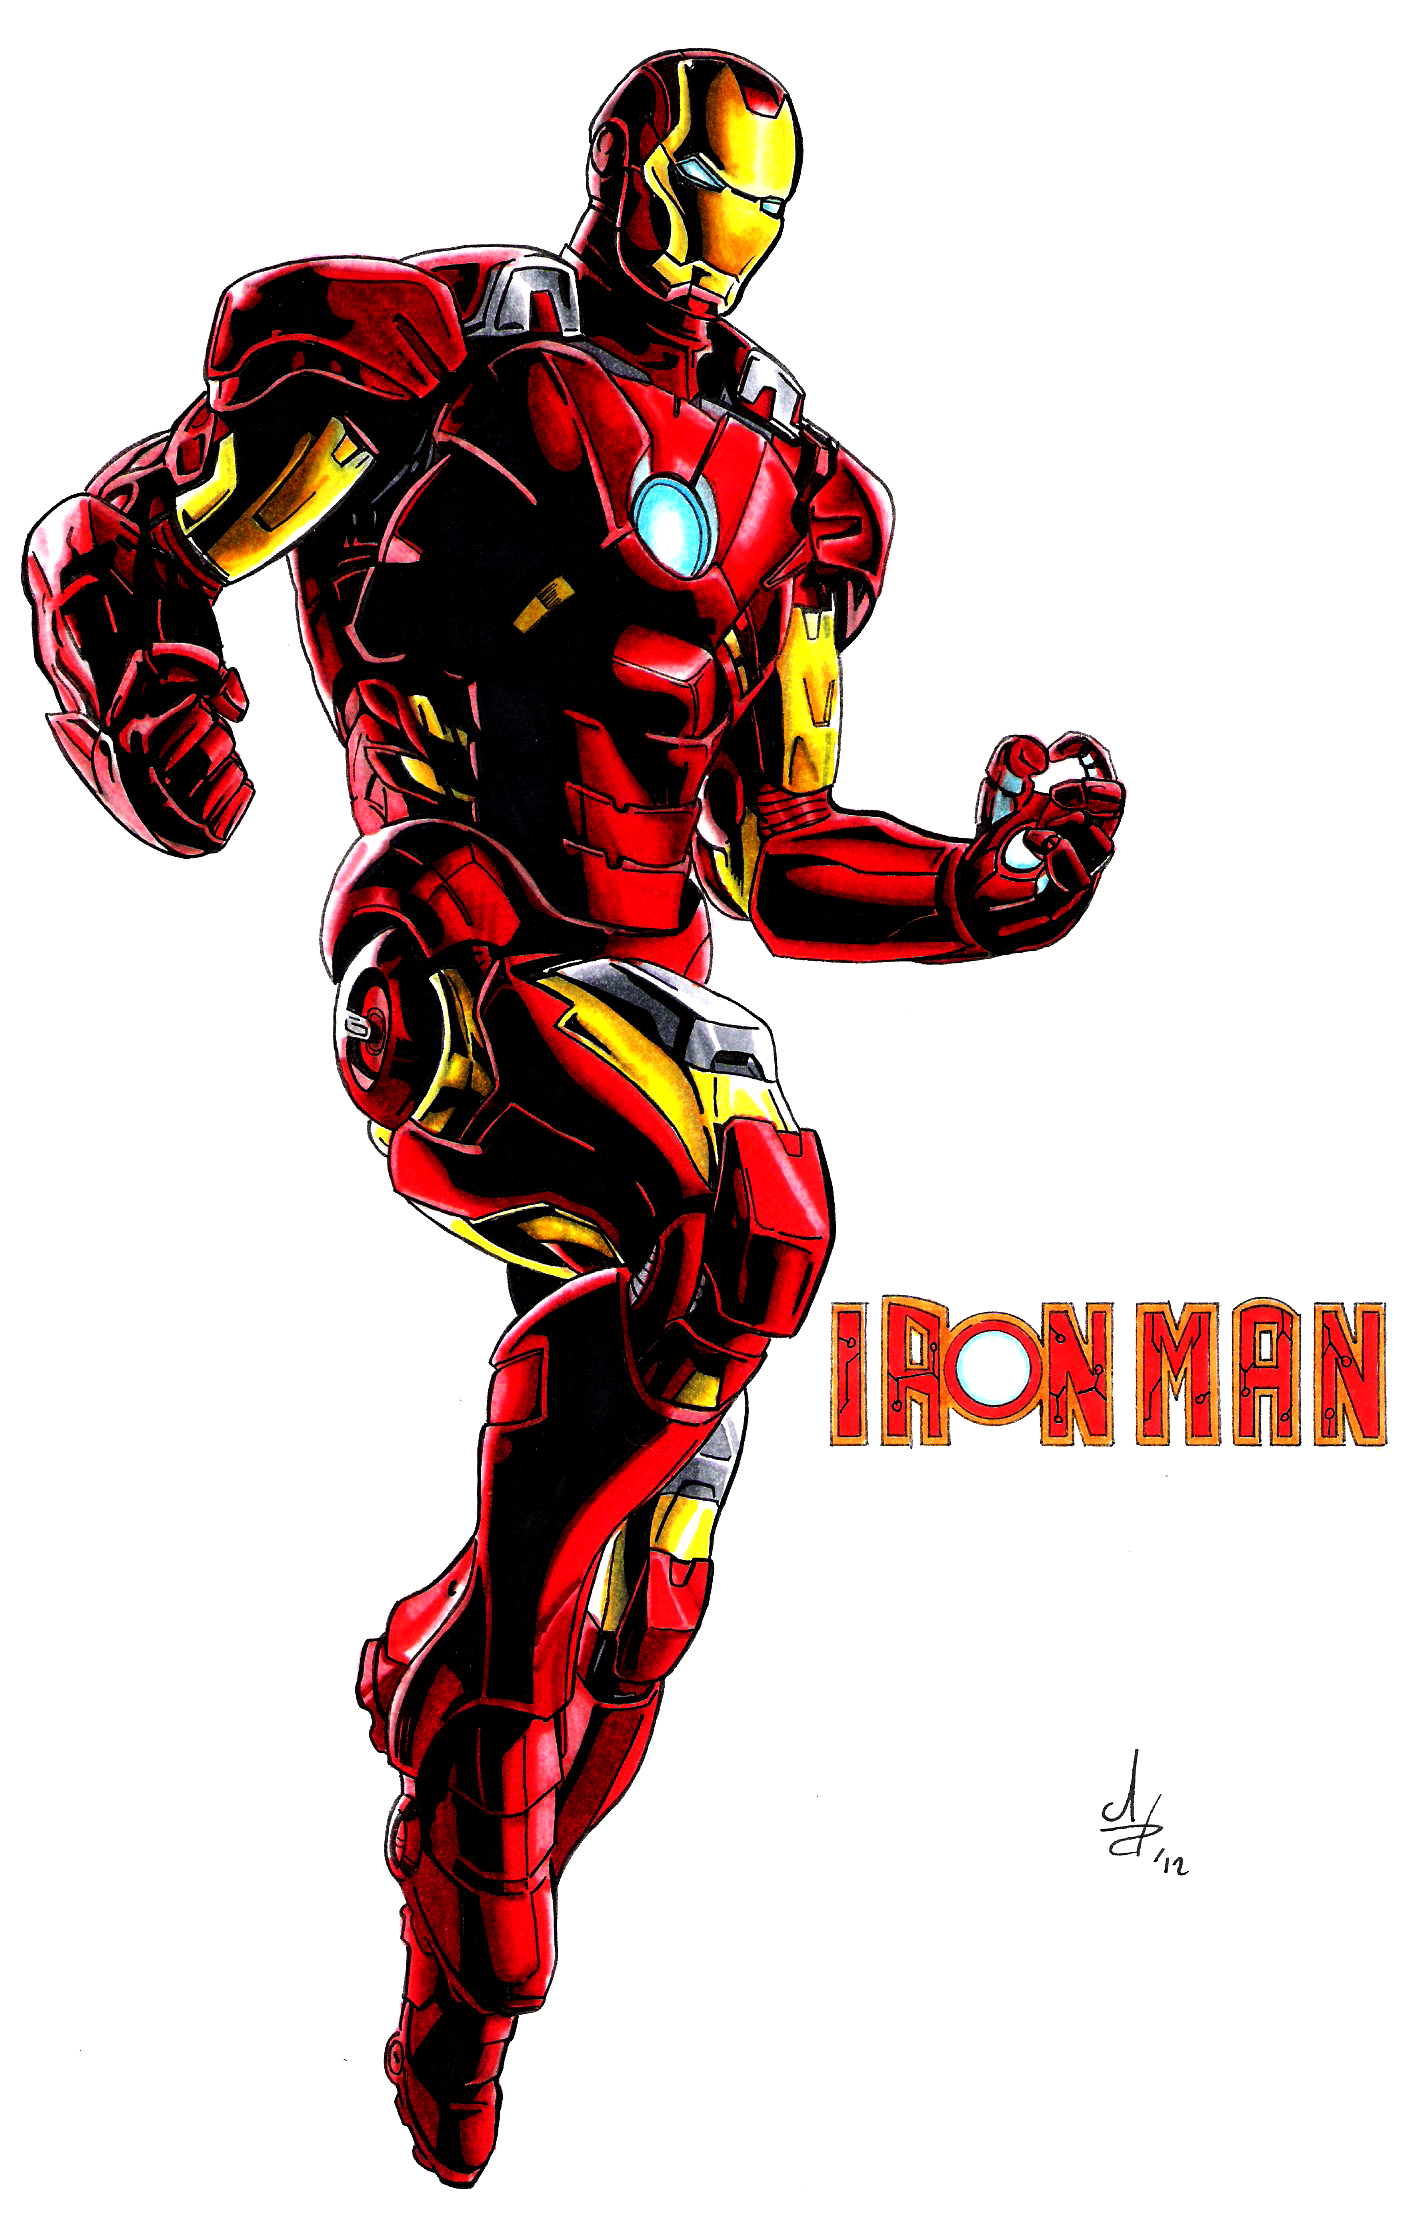 Iron Man comic cartoon wallpapers | PixelsTalk.Net